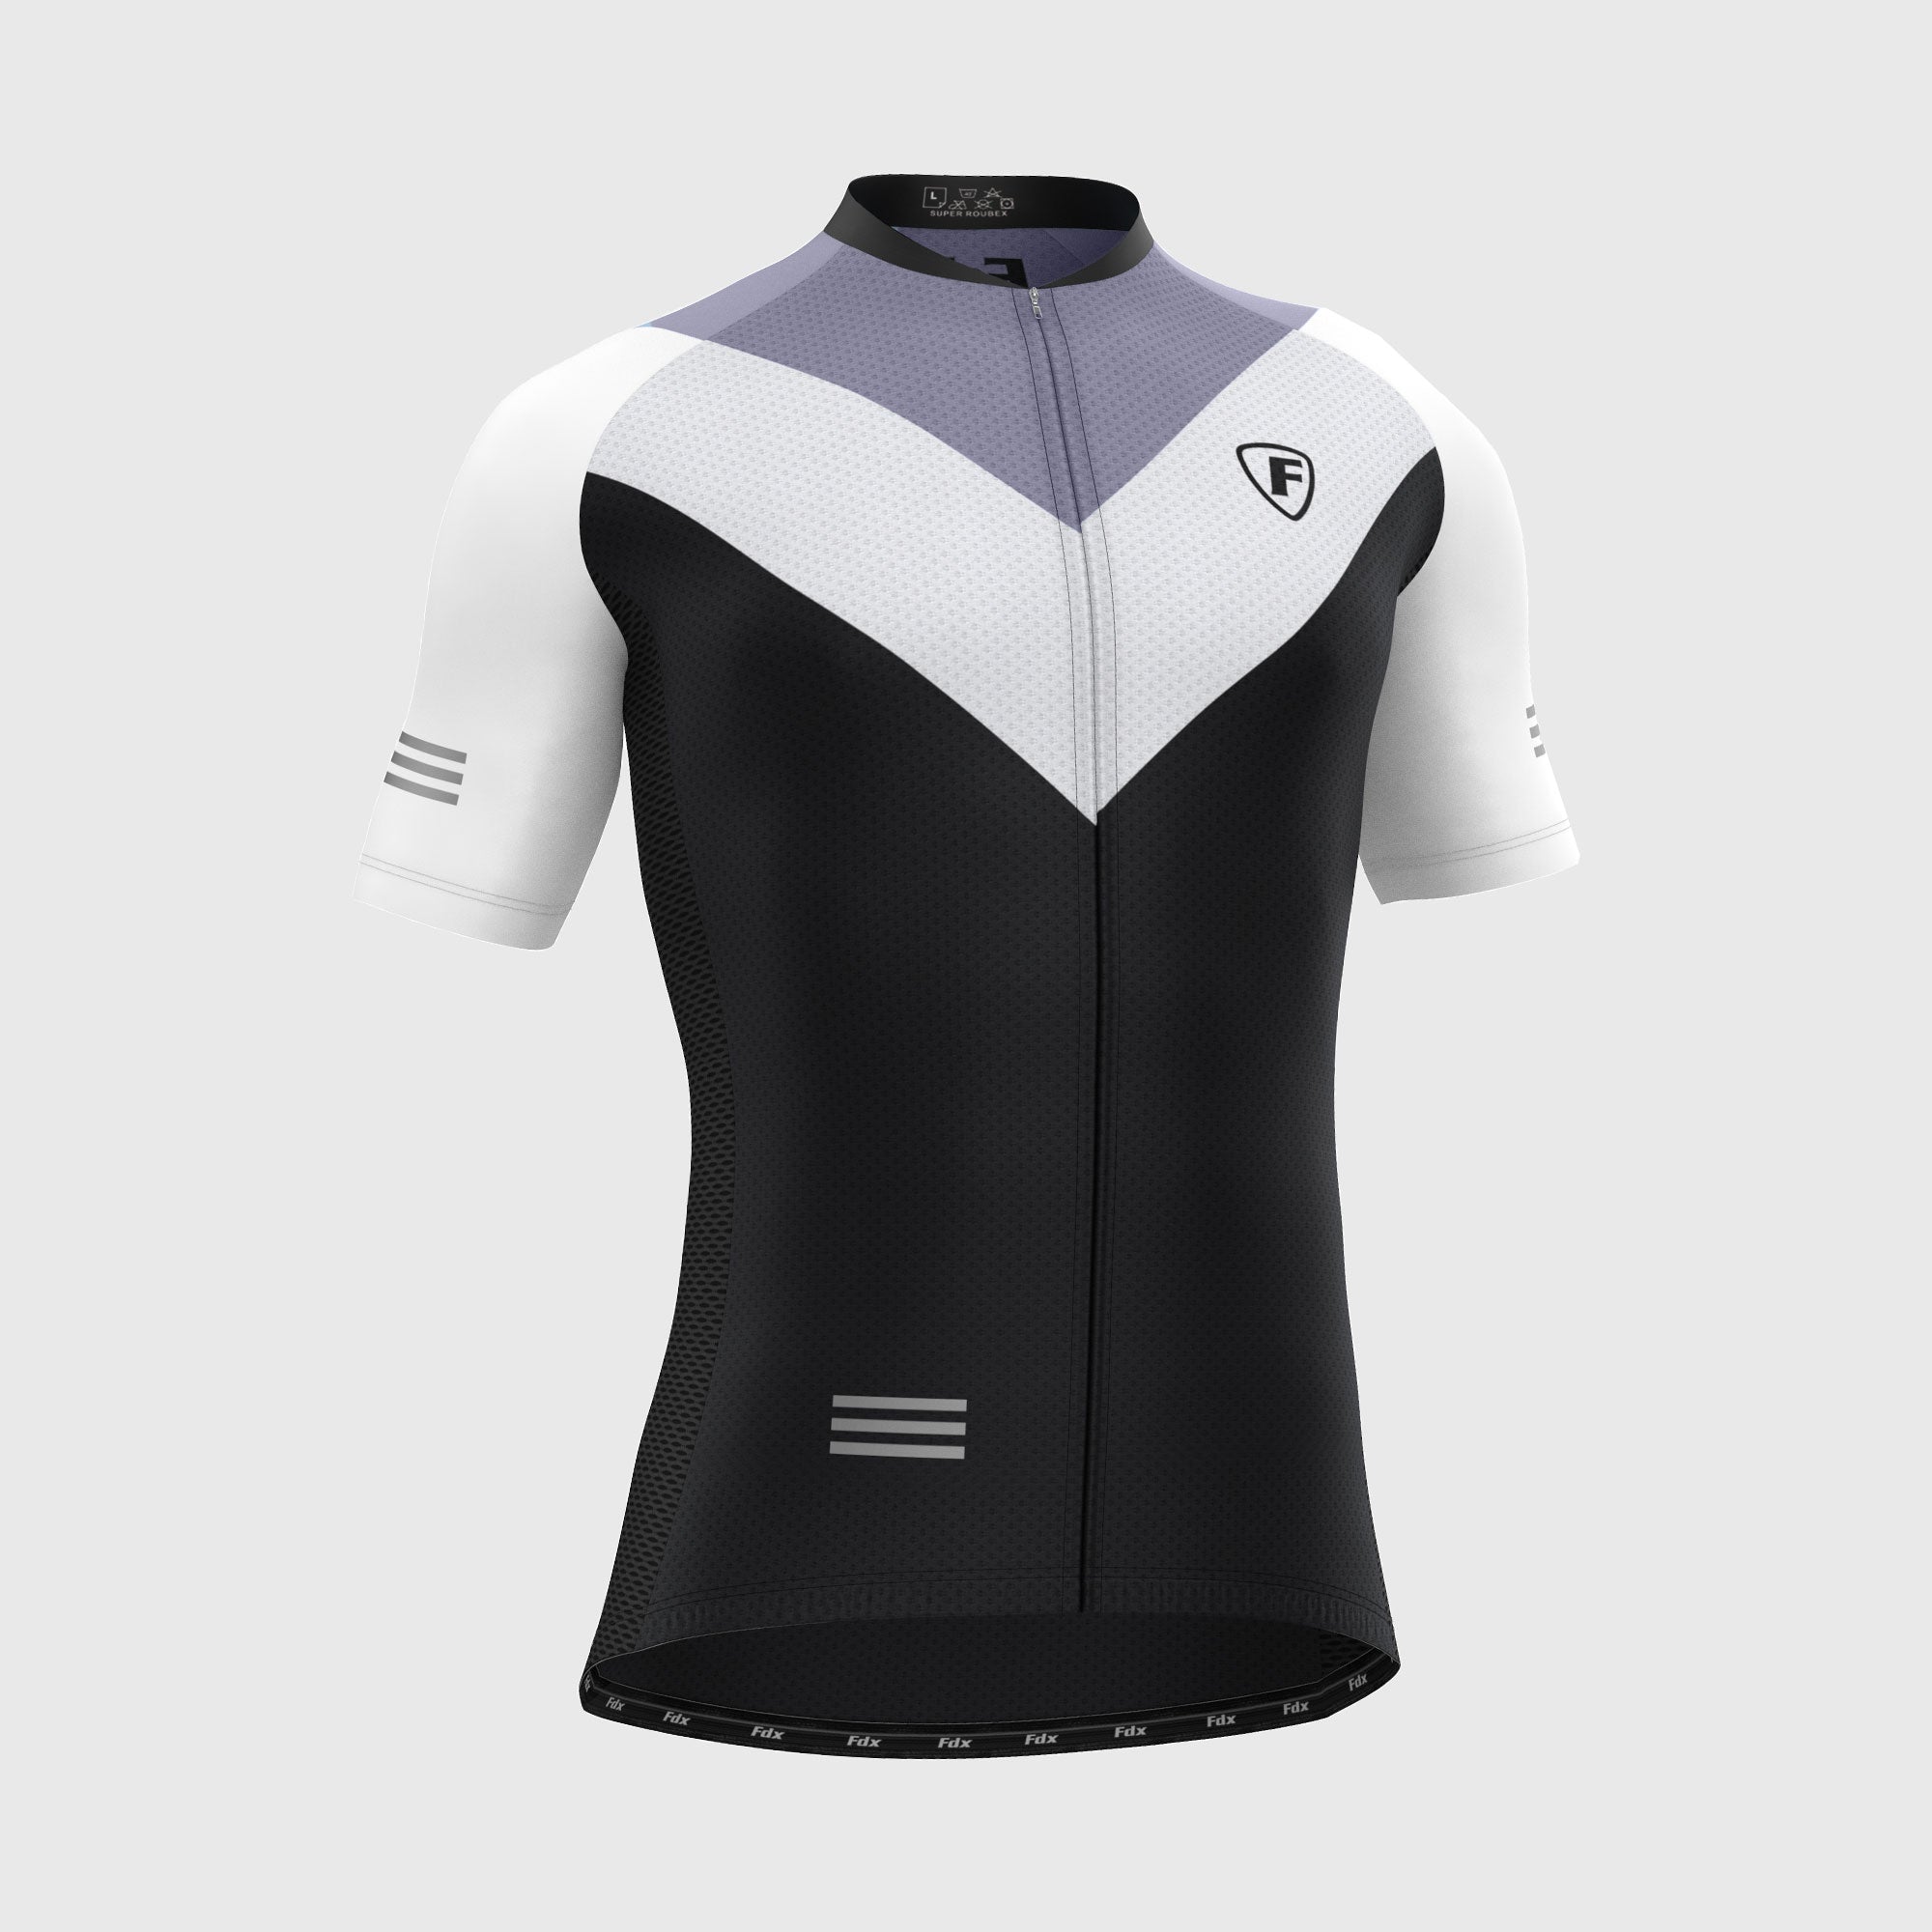 Fdx Mens Black & Grey Short Sleeve Cycling Jersey for Summer Best Road Bike Wear Top Light Weight, Full Zipper, Pockets & Hi-viz Reflectors - Velos